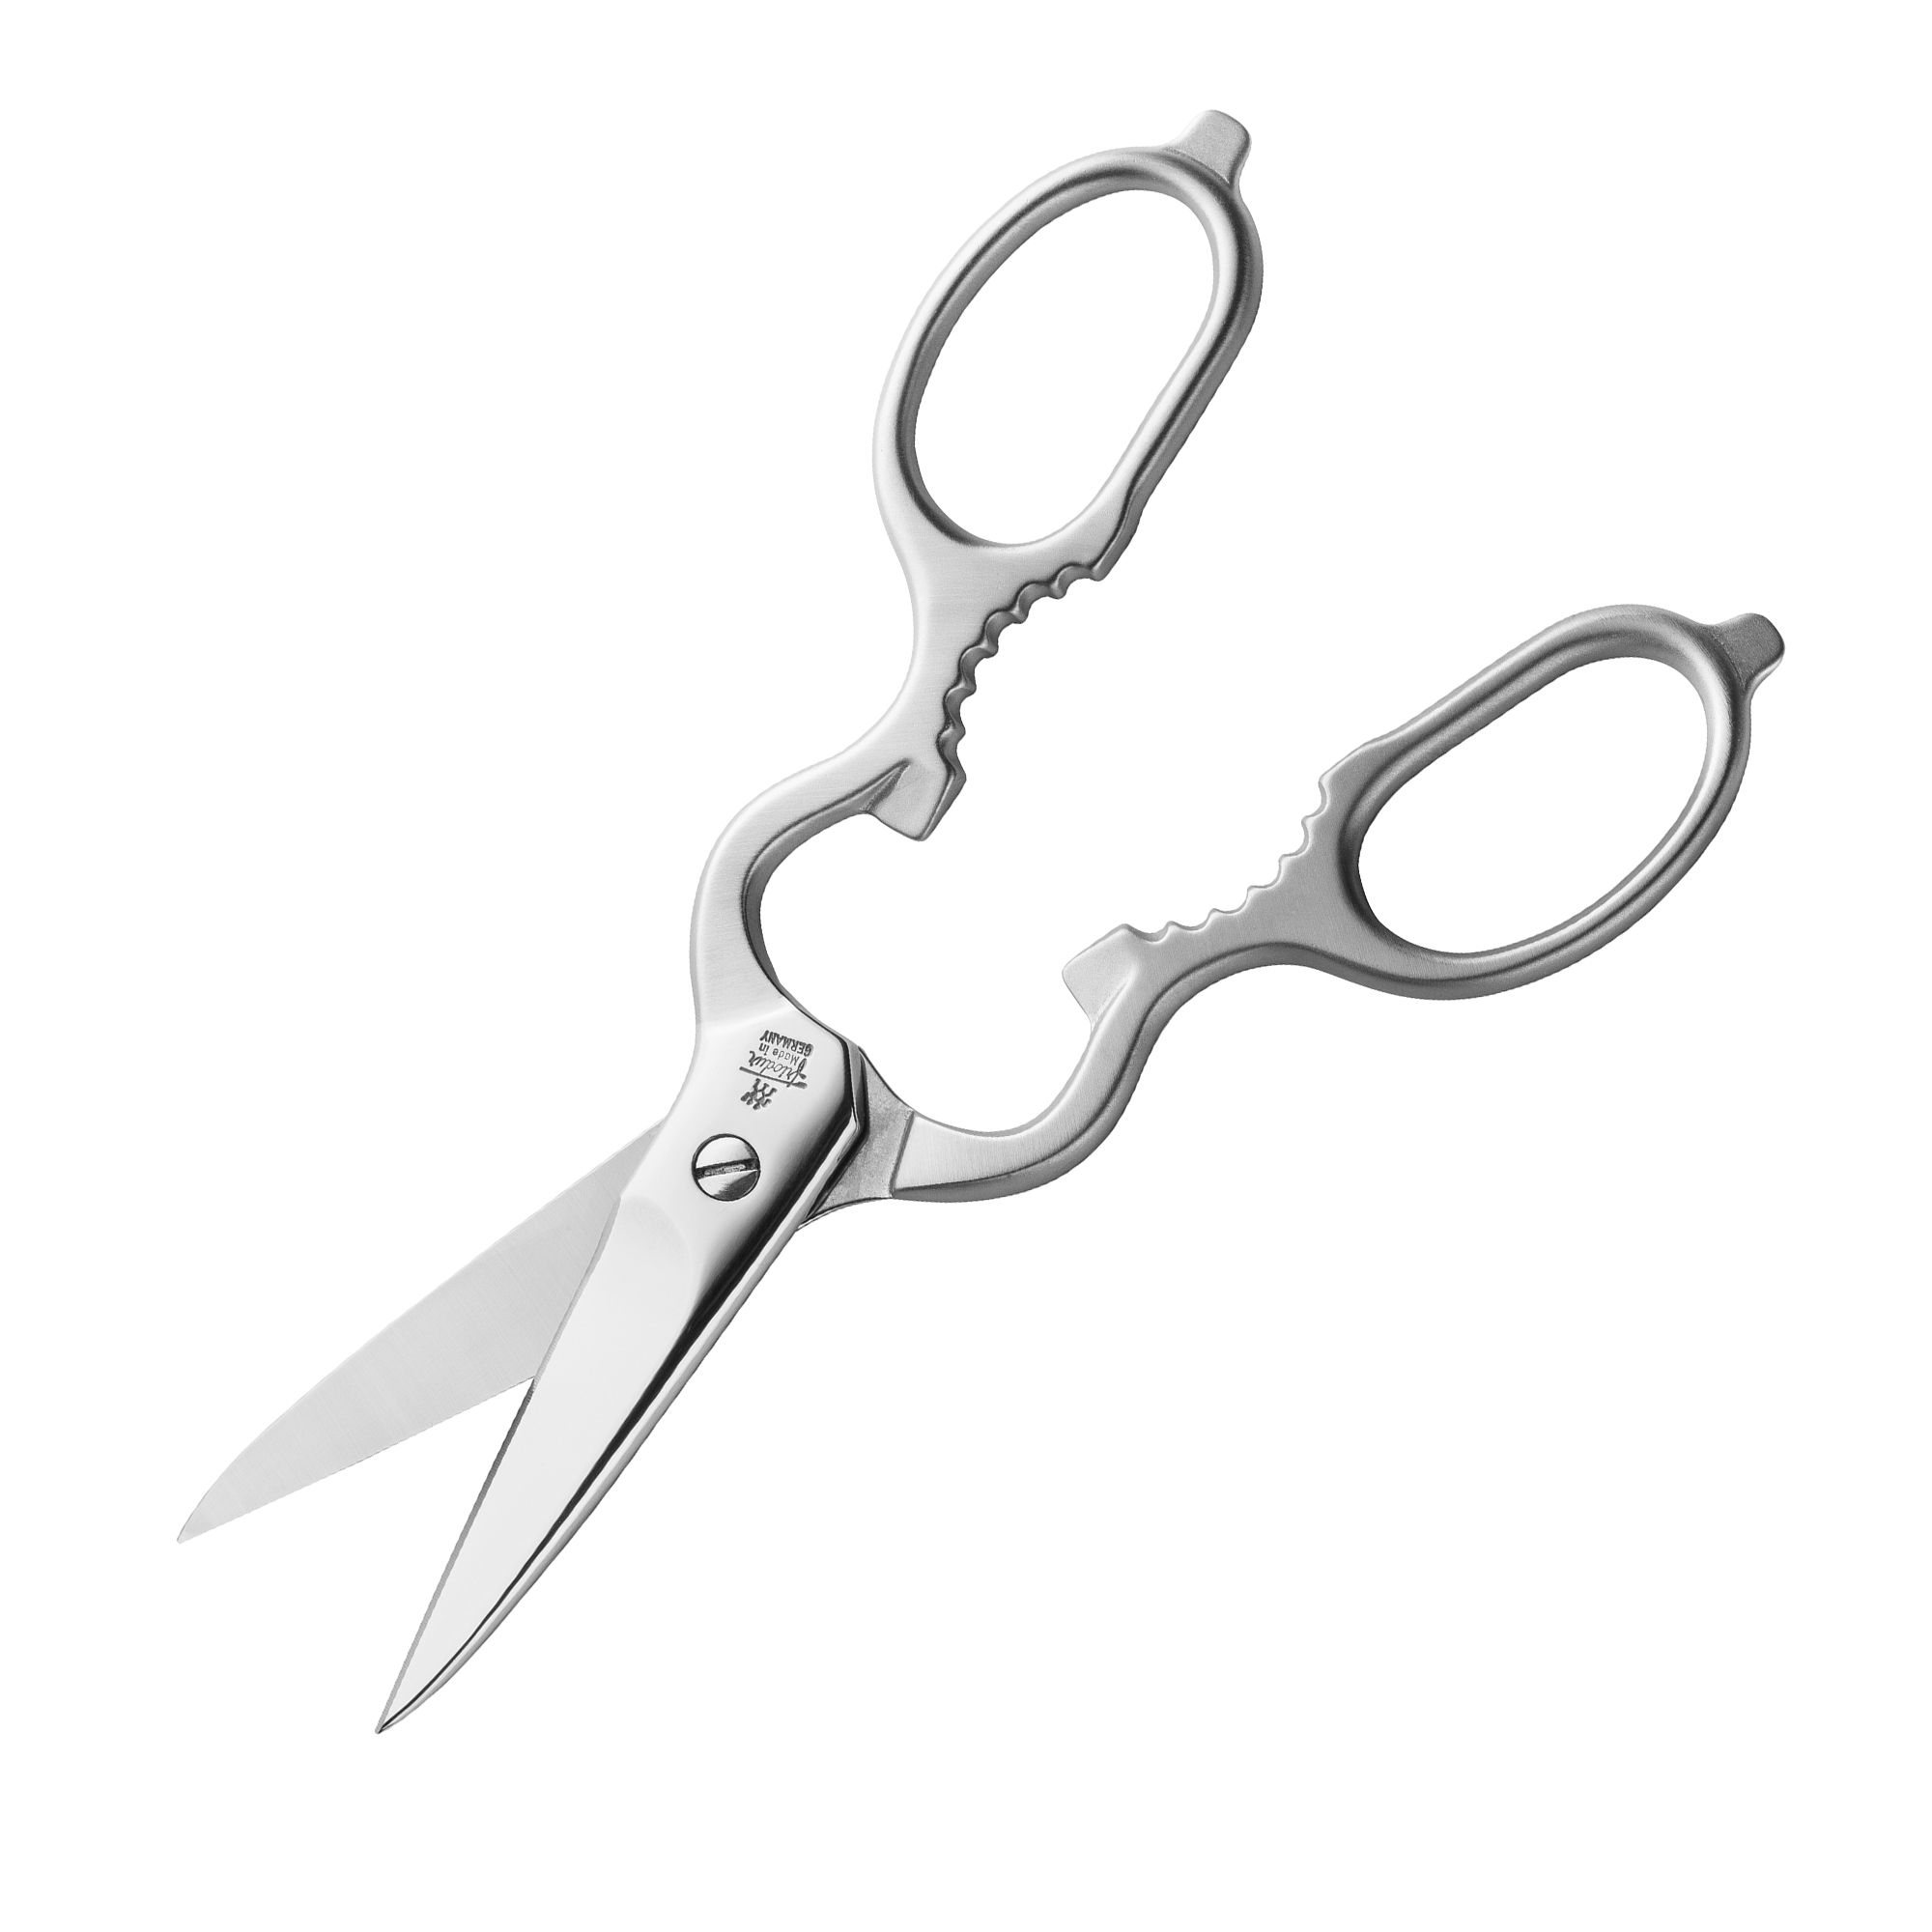 Zwilling - kitchen aid - multi-purpose scissors - 20 cm